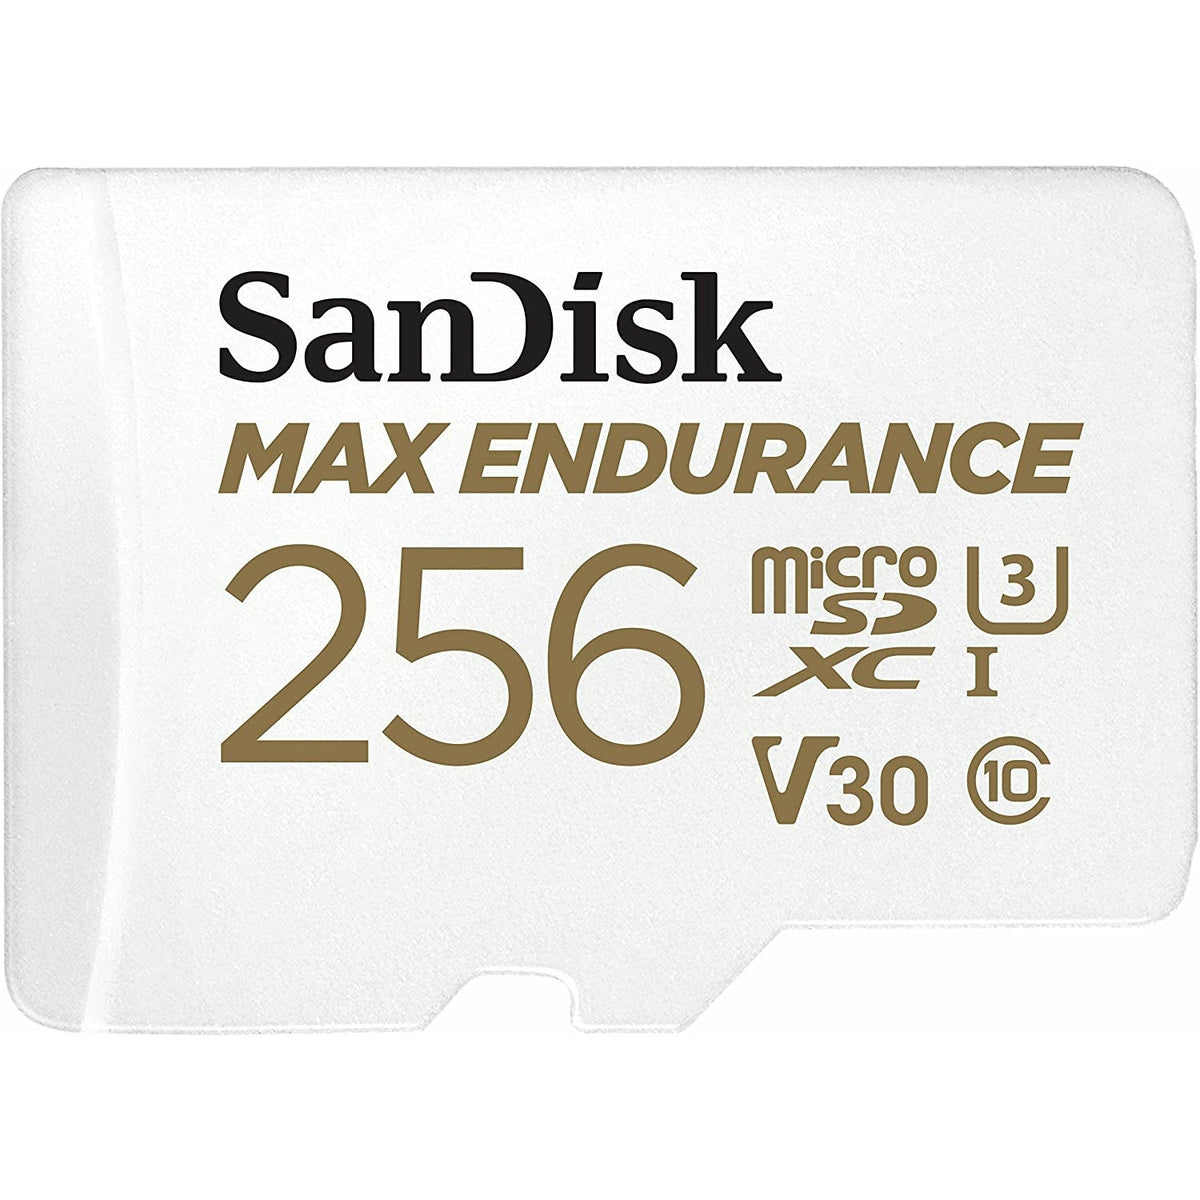 Sandisk Max Endurance Microsdxc Card SQQVR 256G (120 000 HRS) UHS-I C10 U3 V30 100MB/S R 40MB/S W SD Adaptor SDSQQVR-256G-GN6IA